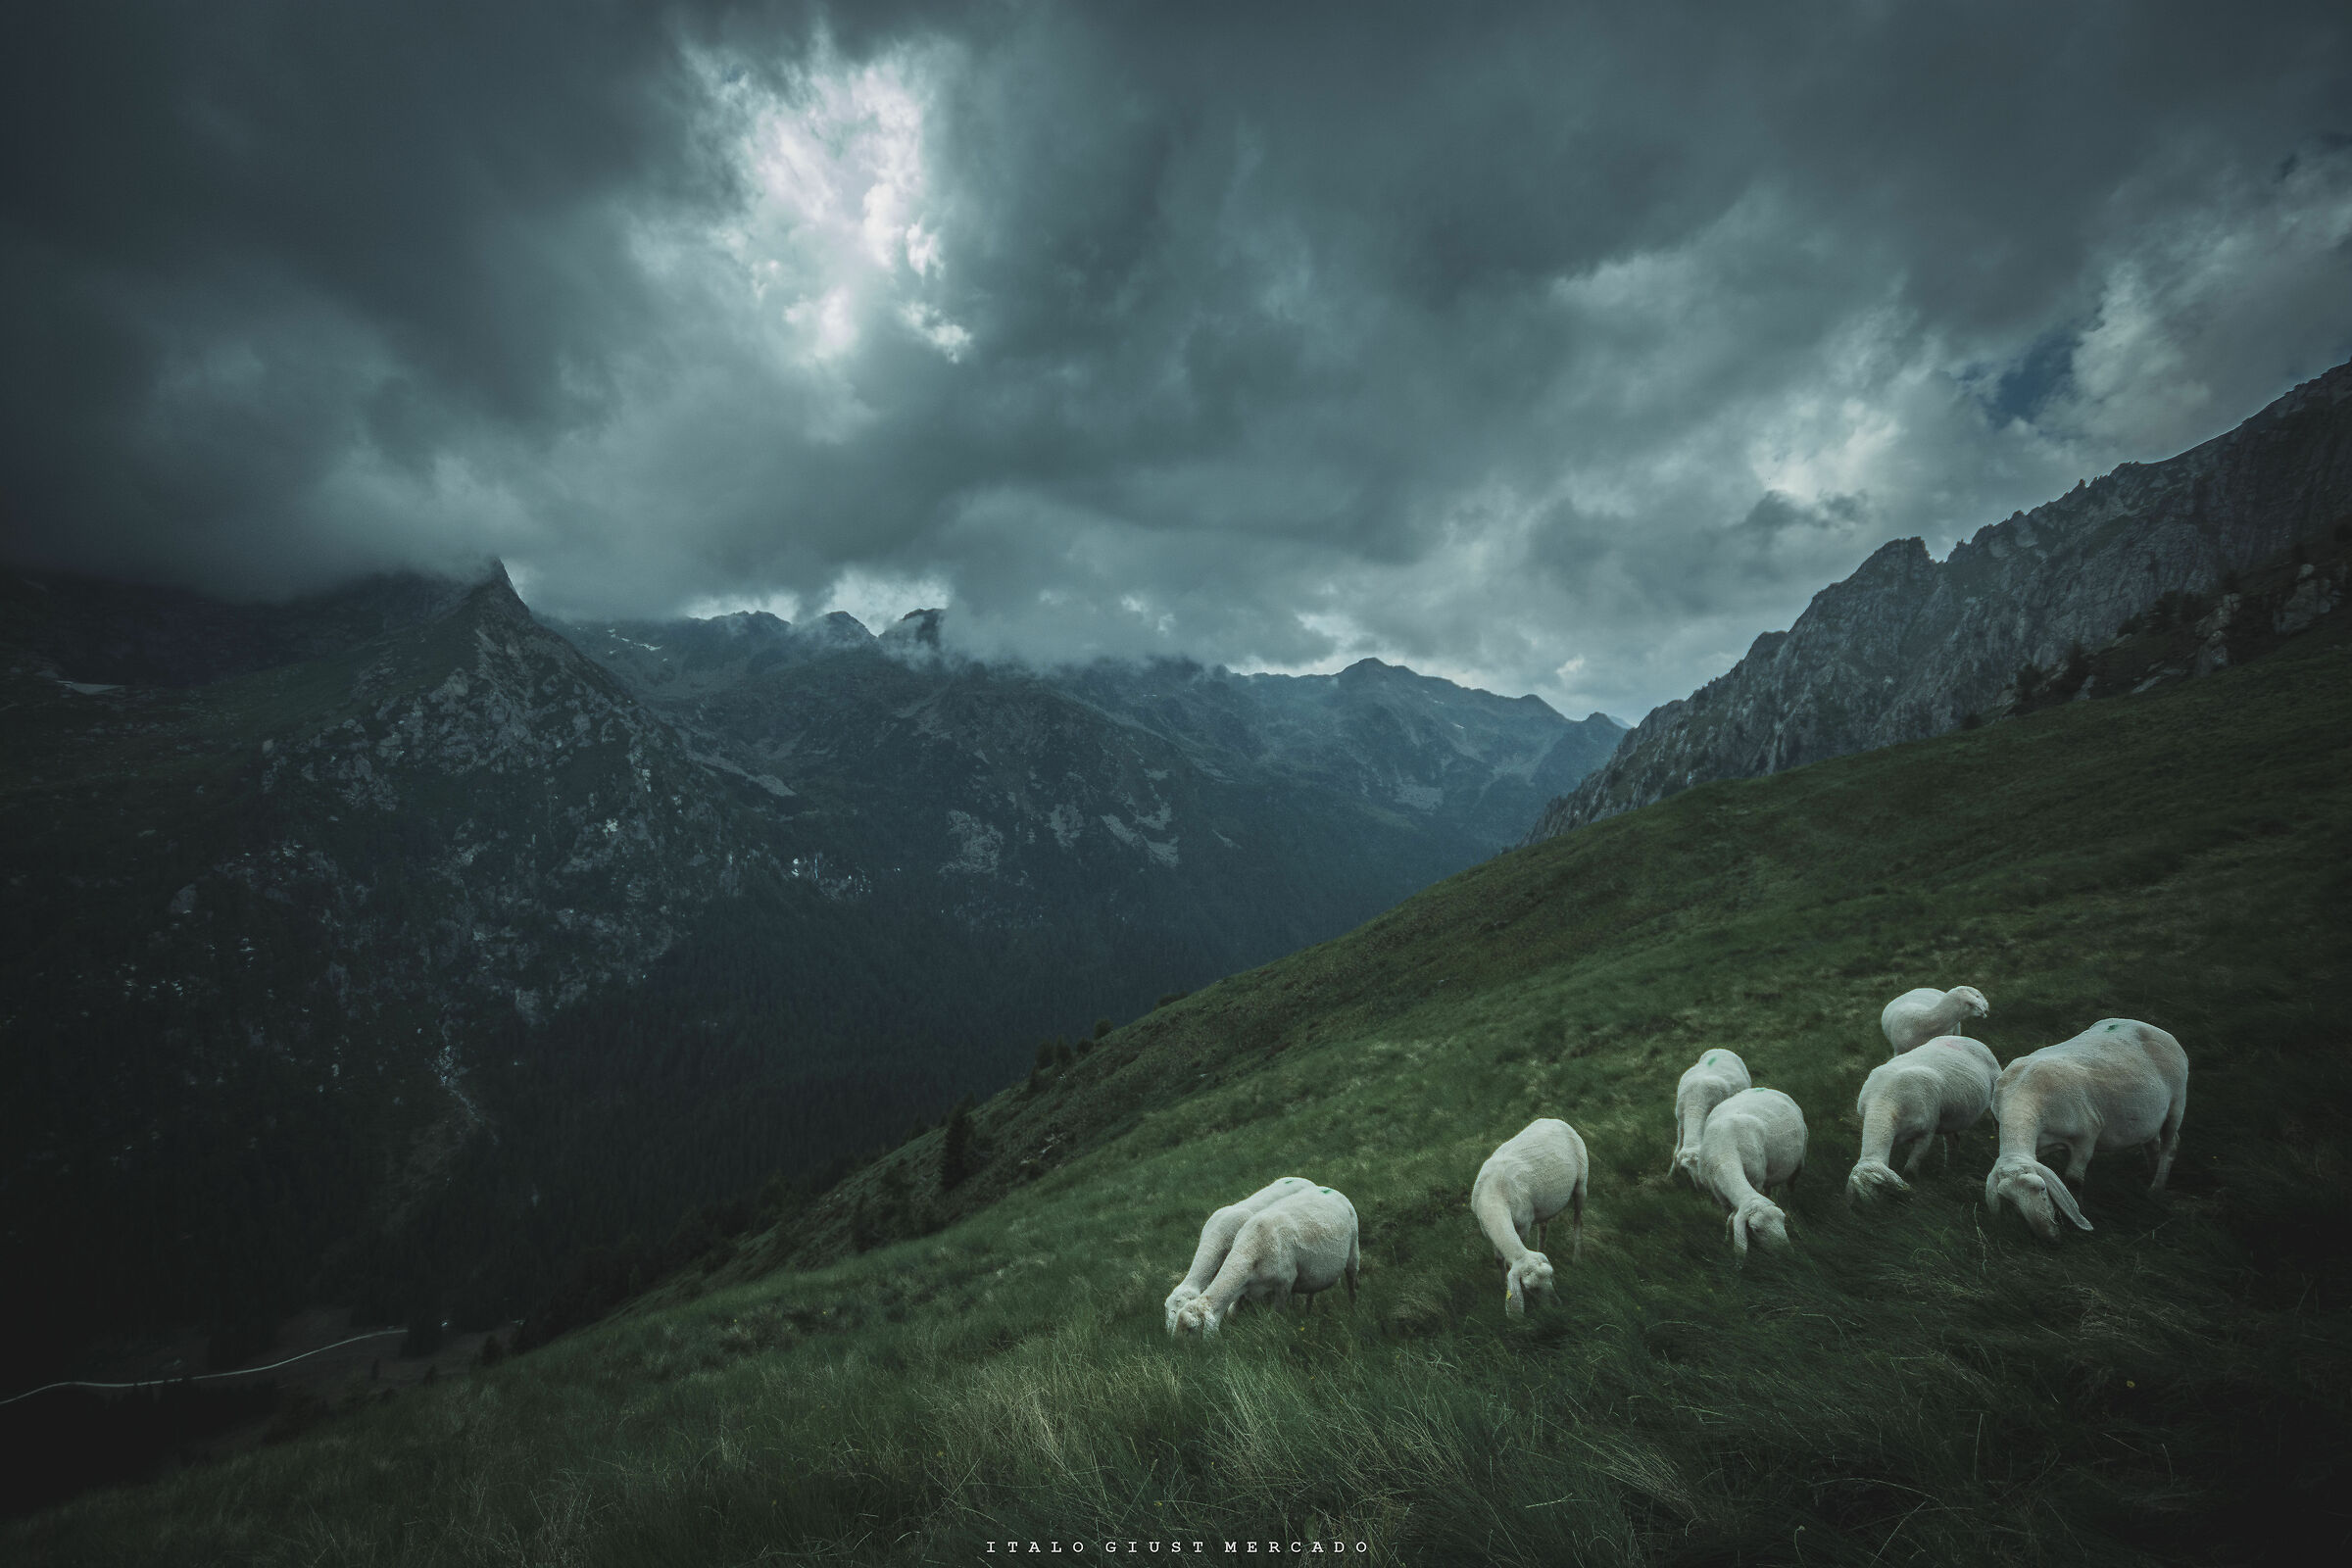 Menacing clouds over unsuspecting sheep ...